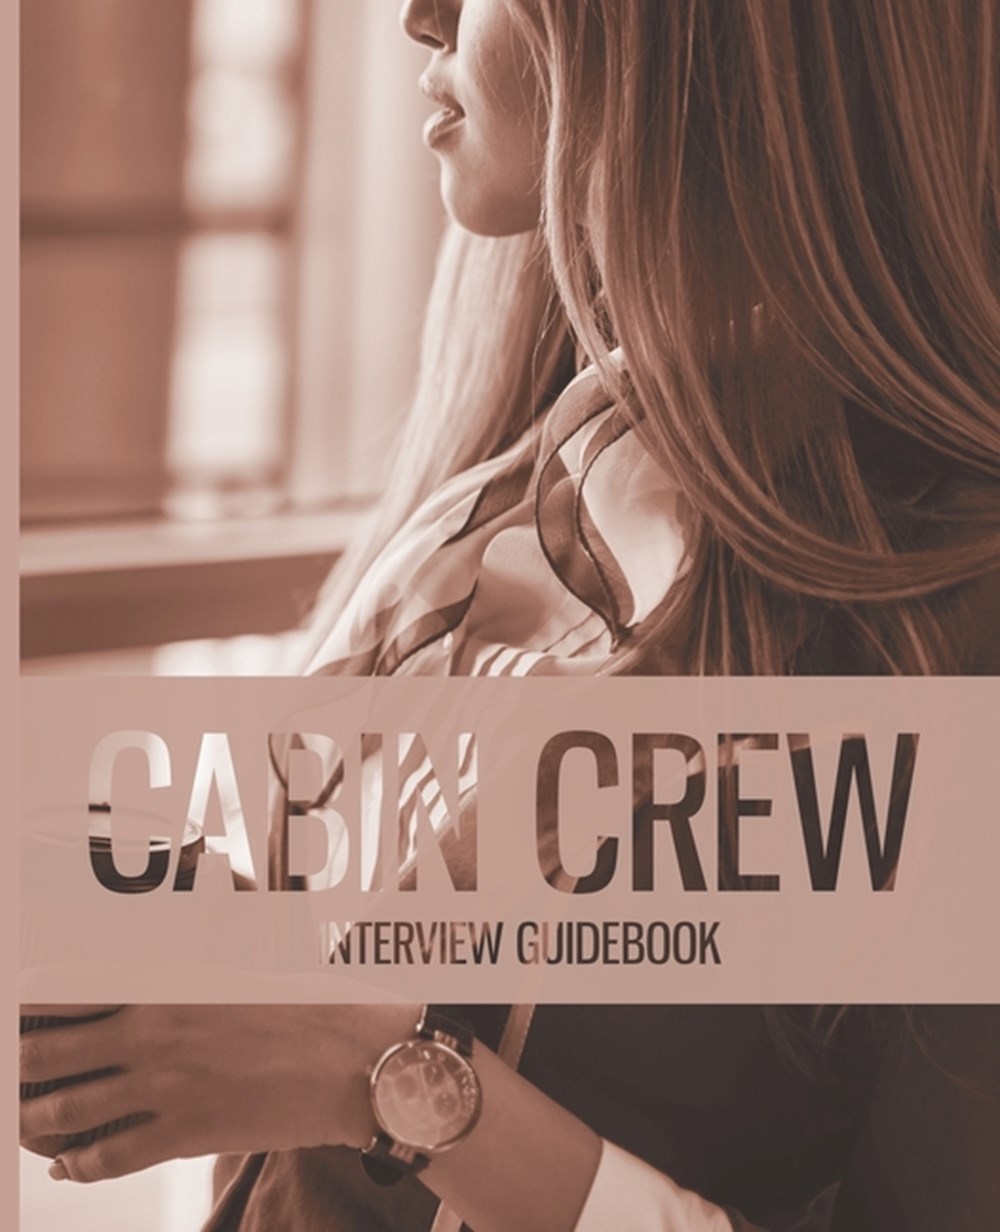 Cabin Crew Guidebook - Essential Introduction